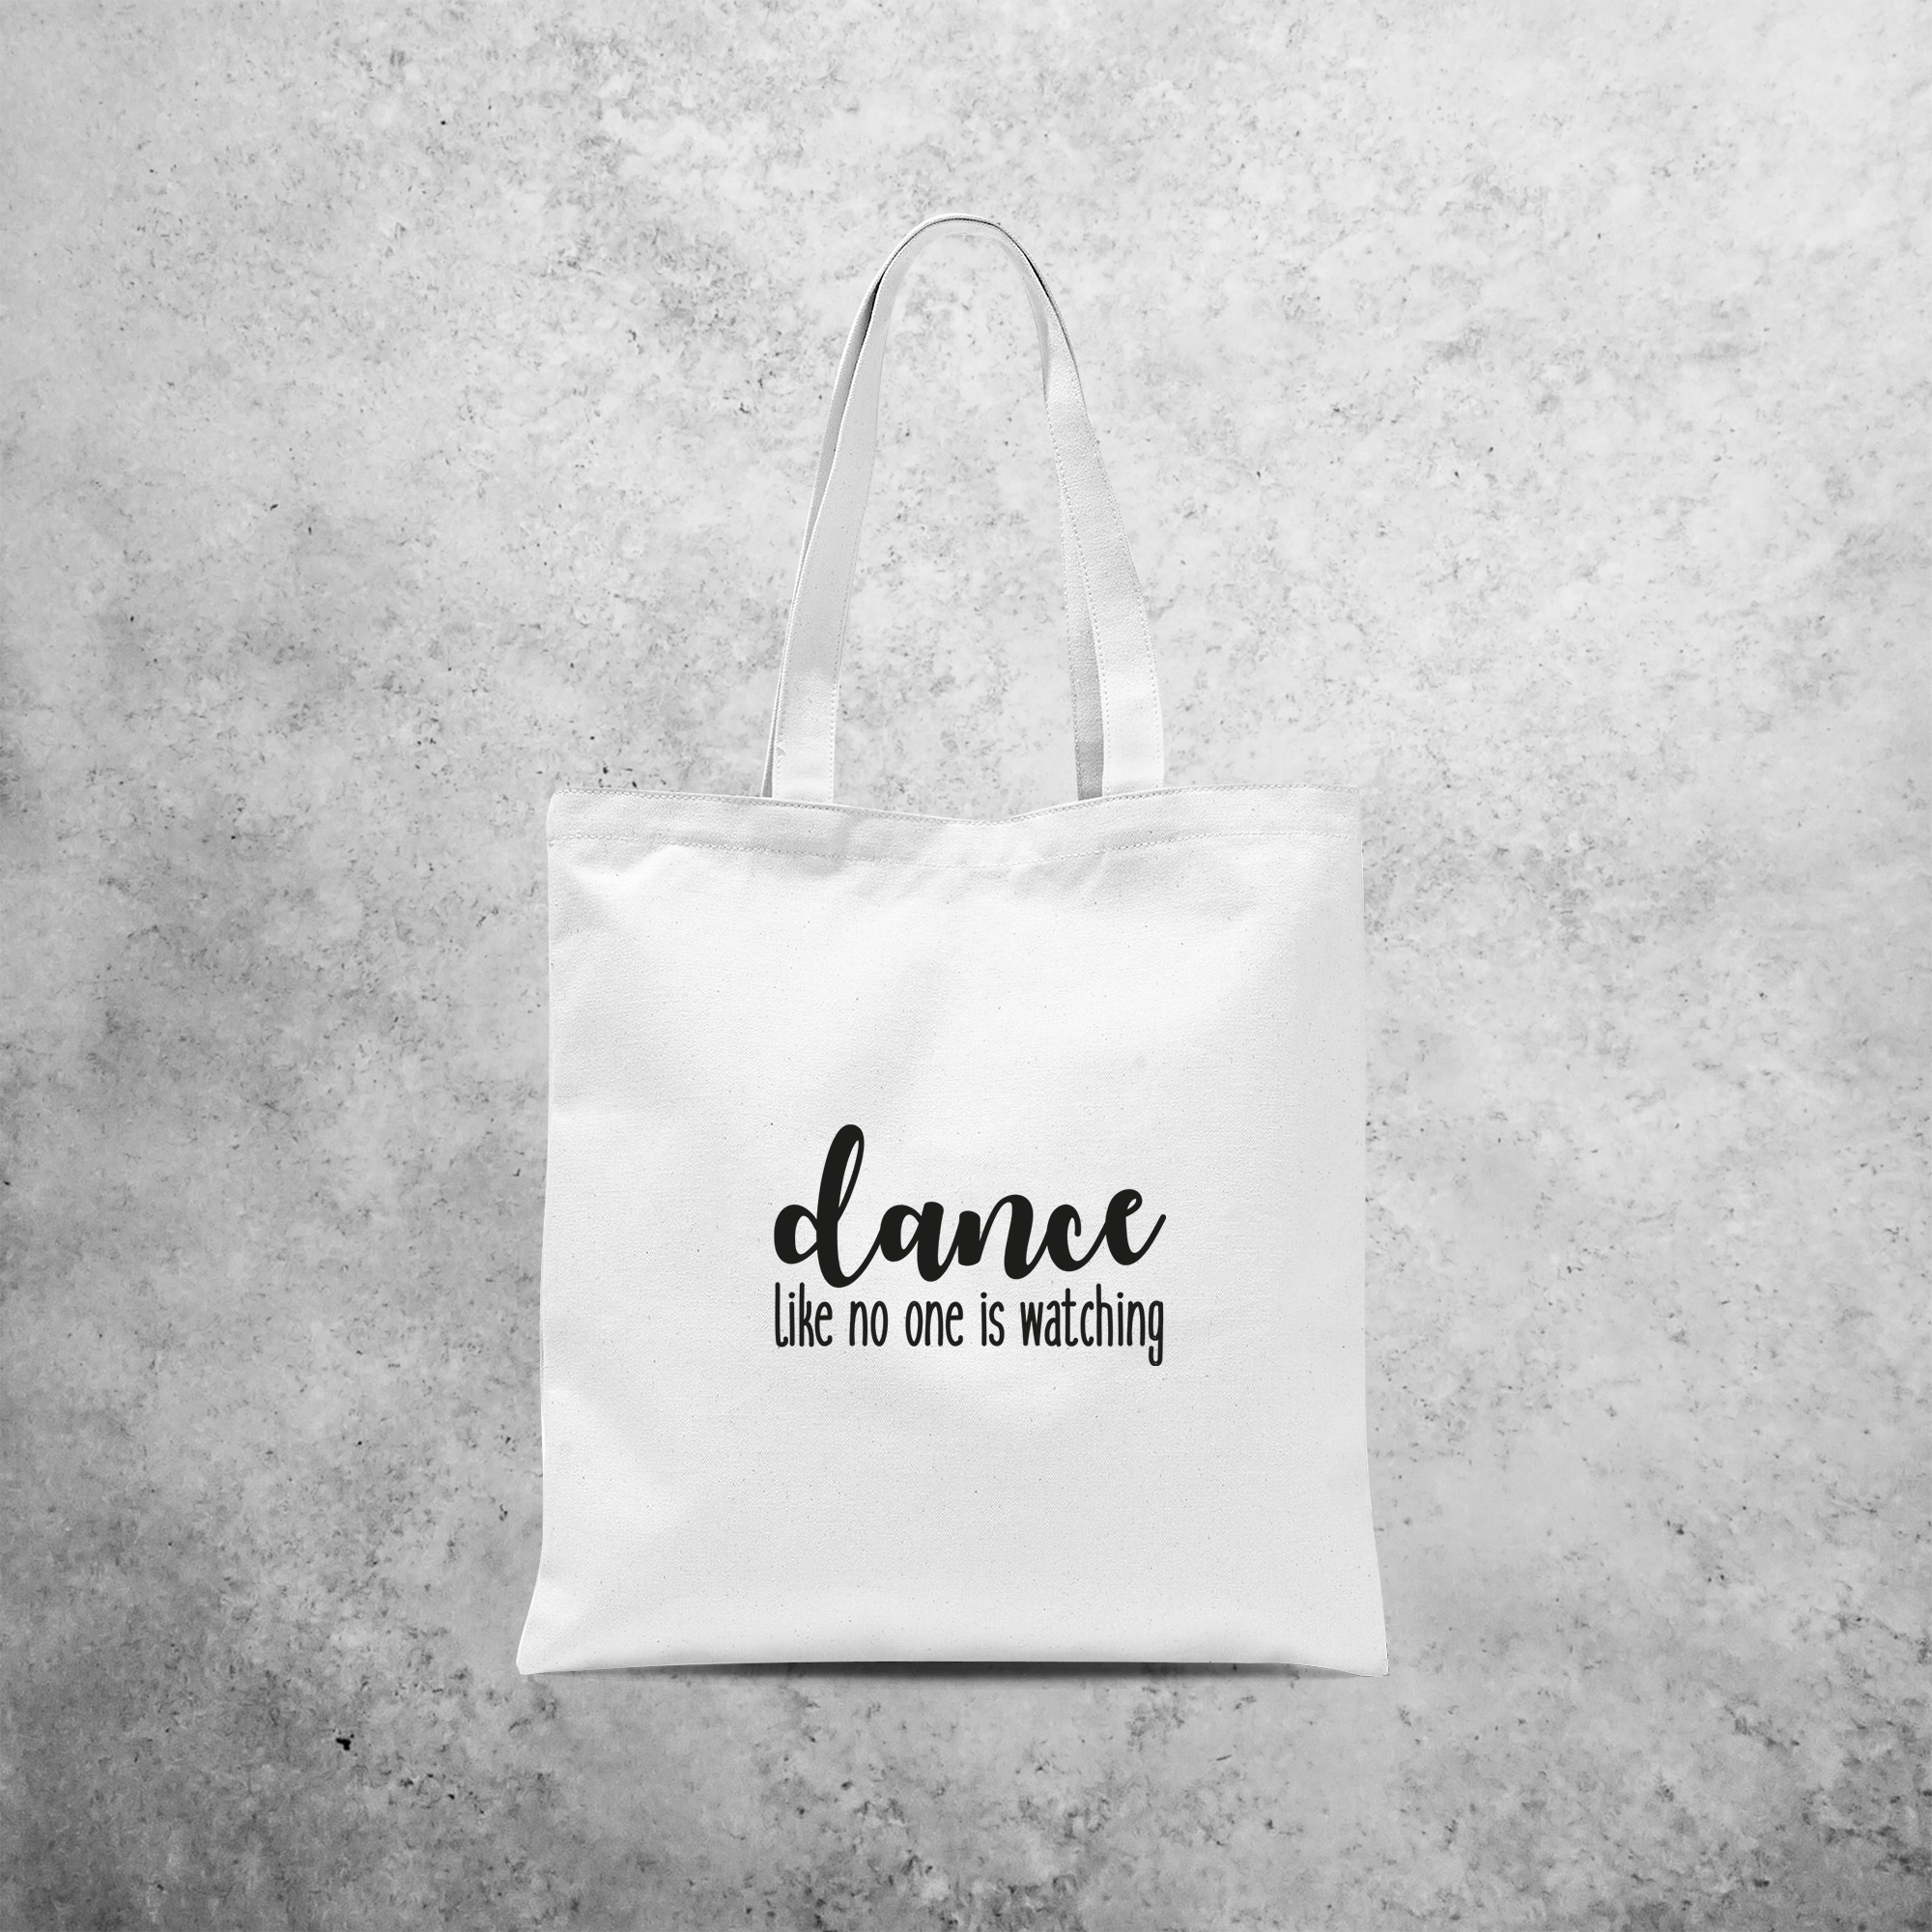 'Dance like no one is watching' tote bag